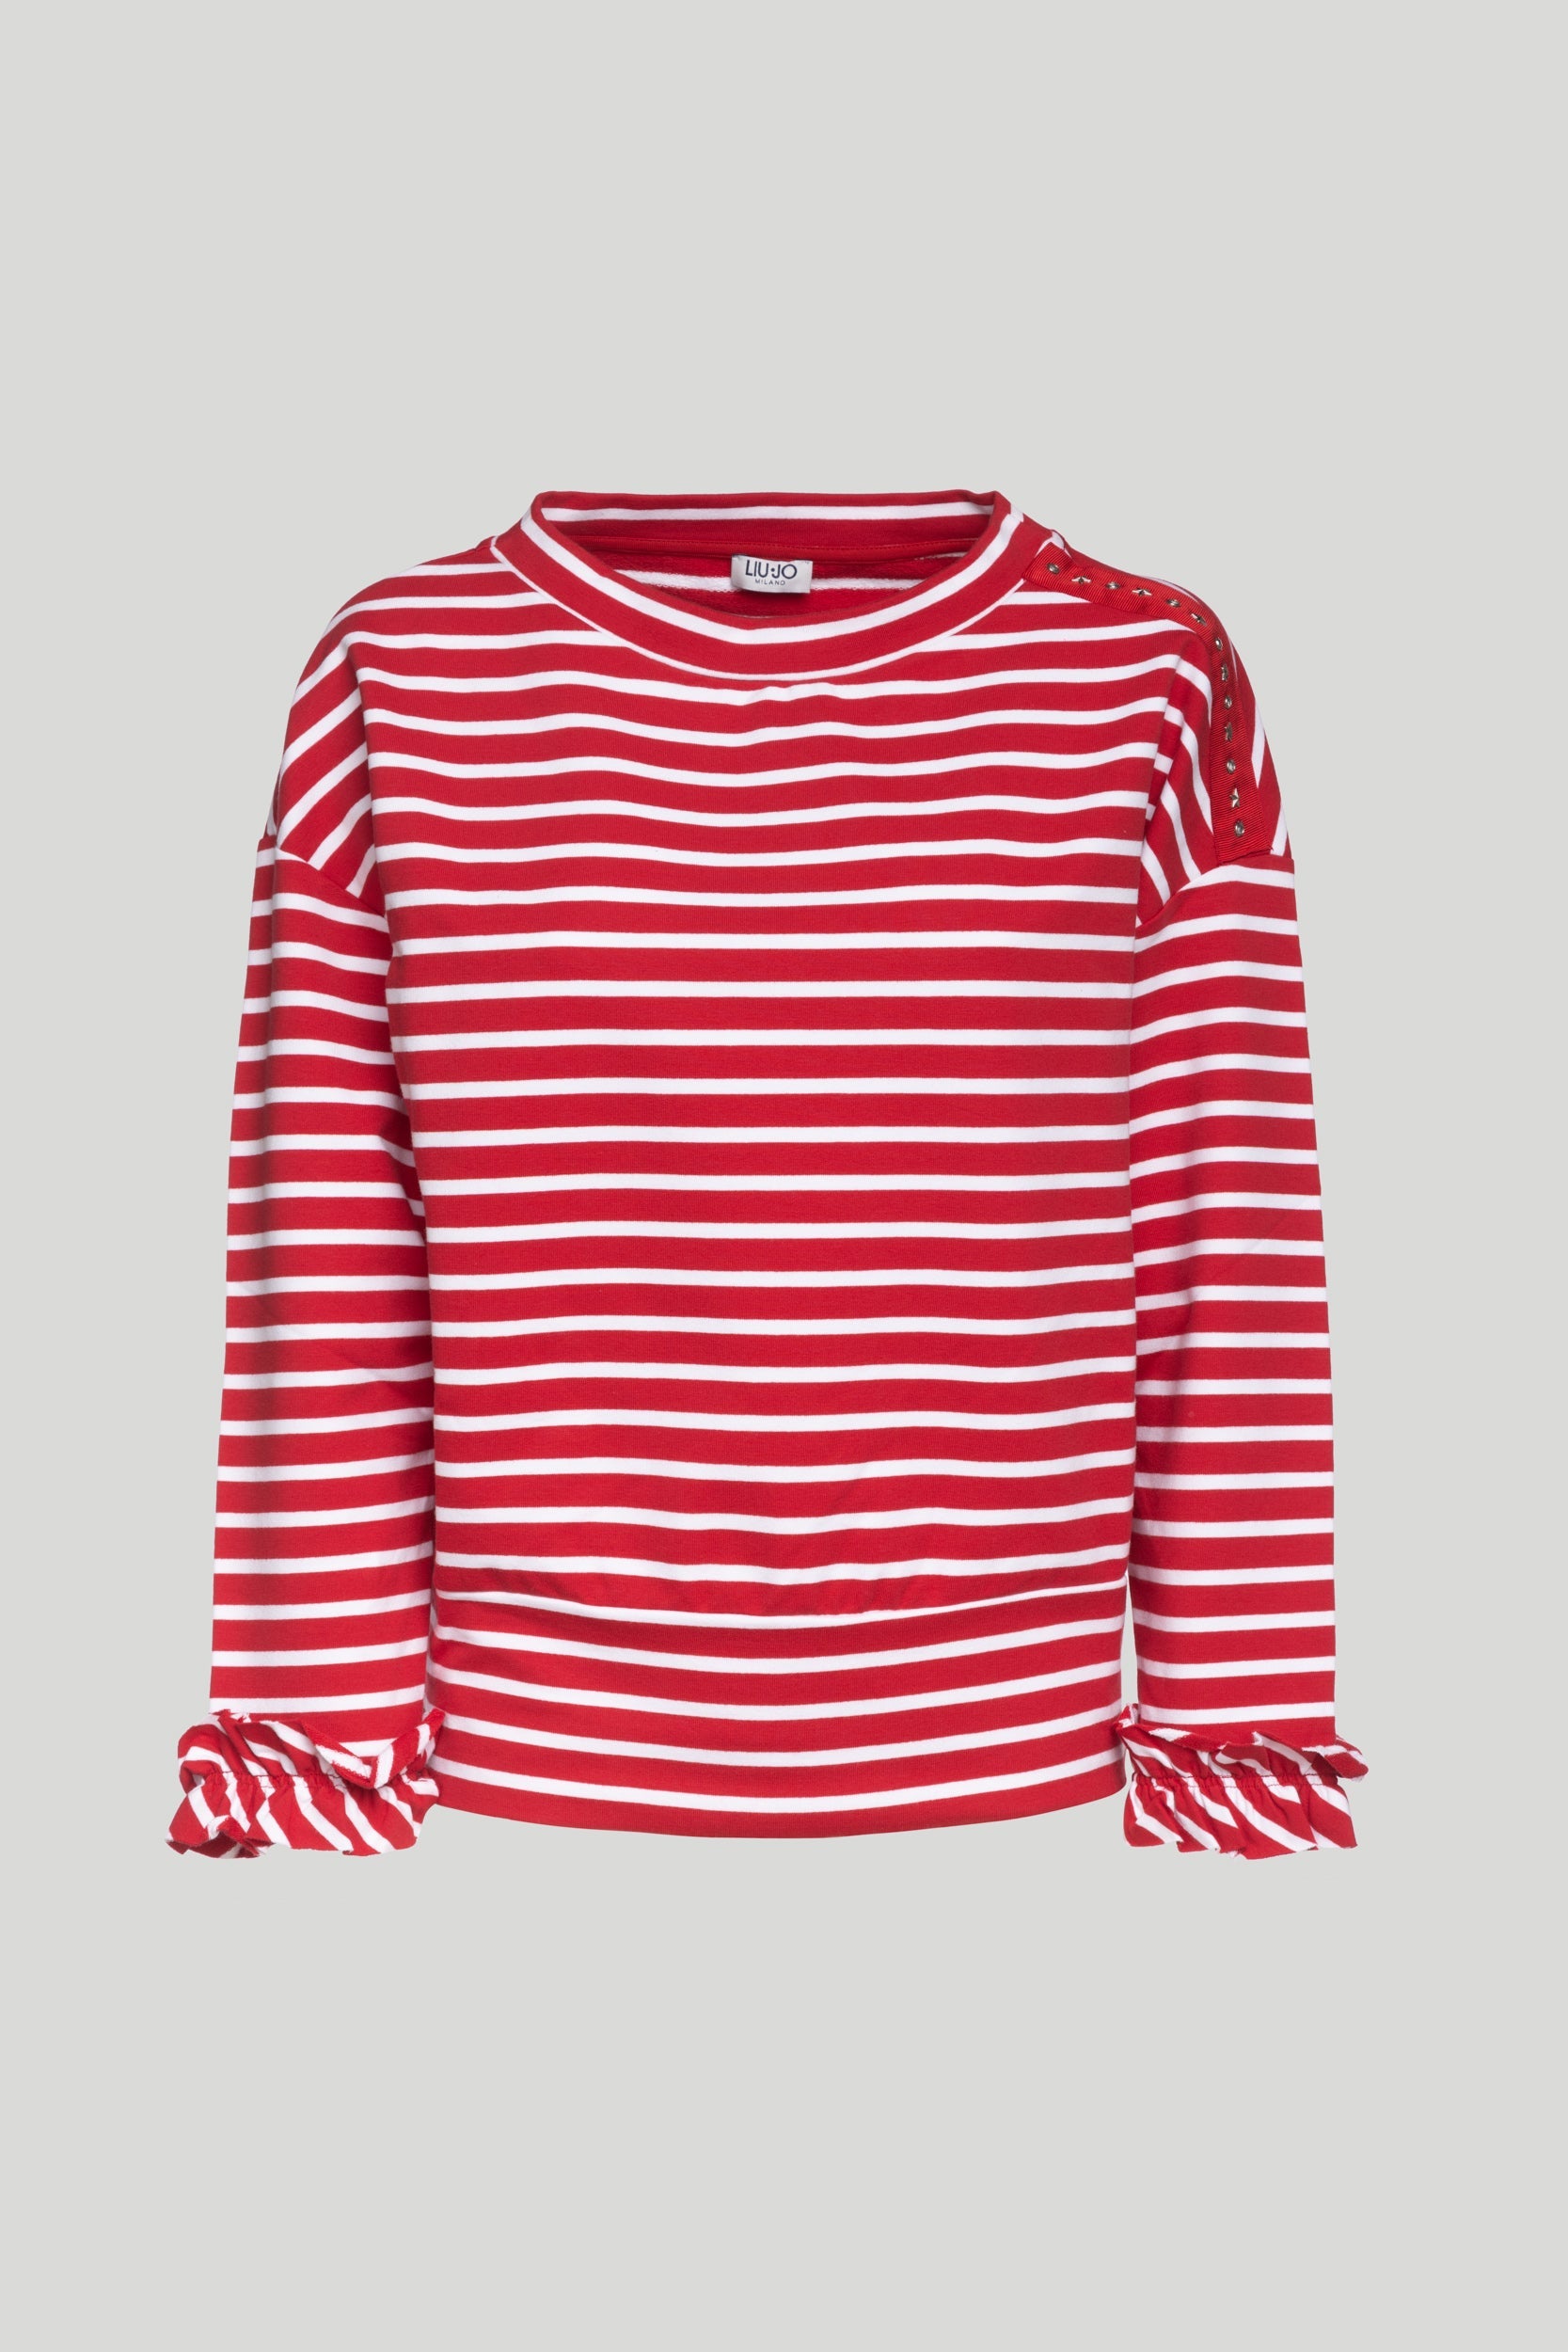 LIU-JO Red and White Striped Sweatshirt